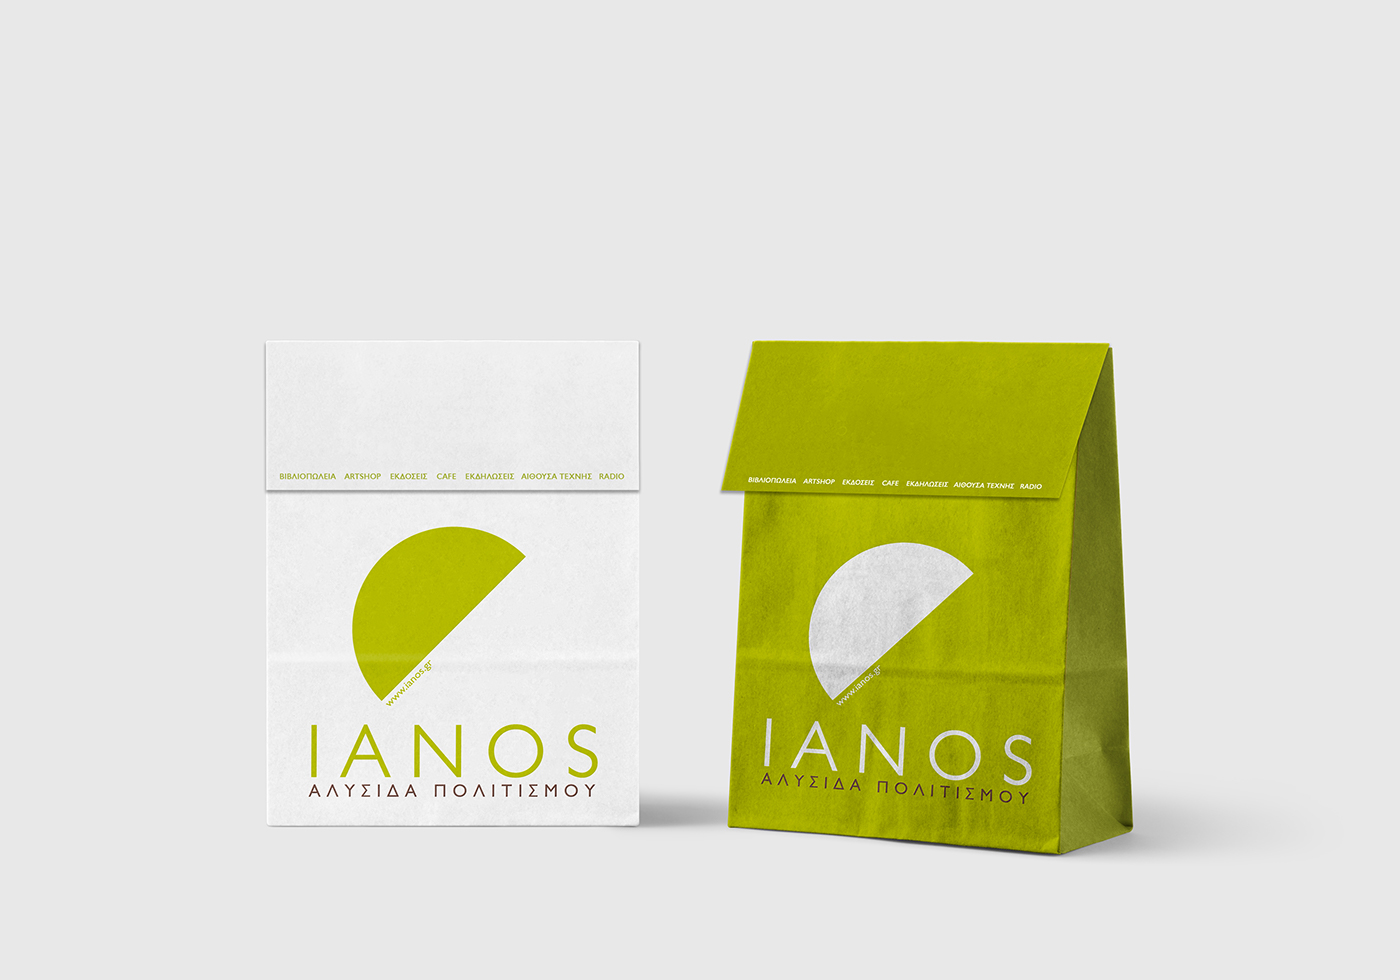 Packaging paper bag bag ianos Bookstore culture chain books Janus ancient roman god package design 